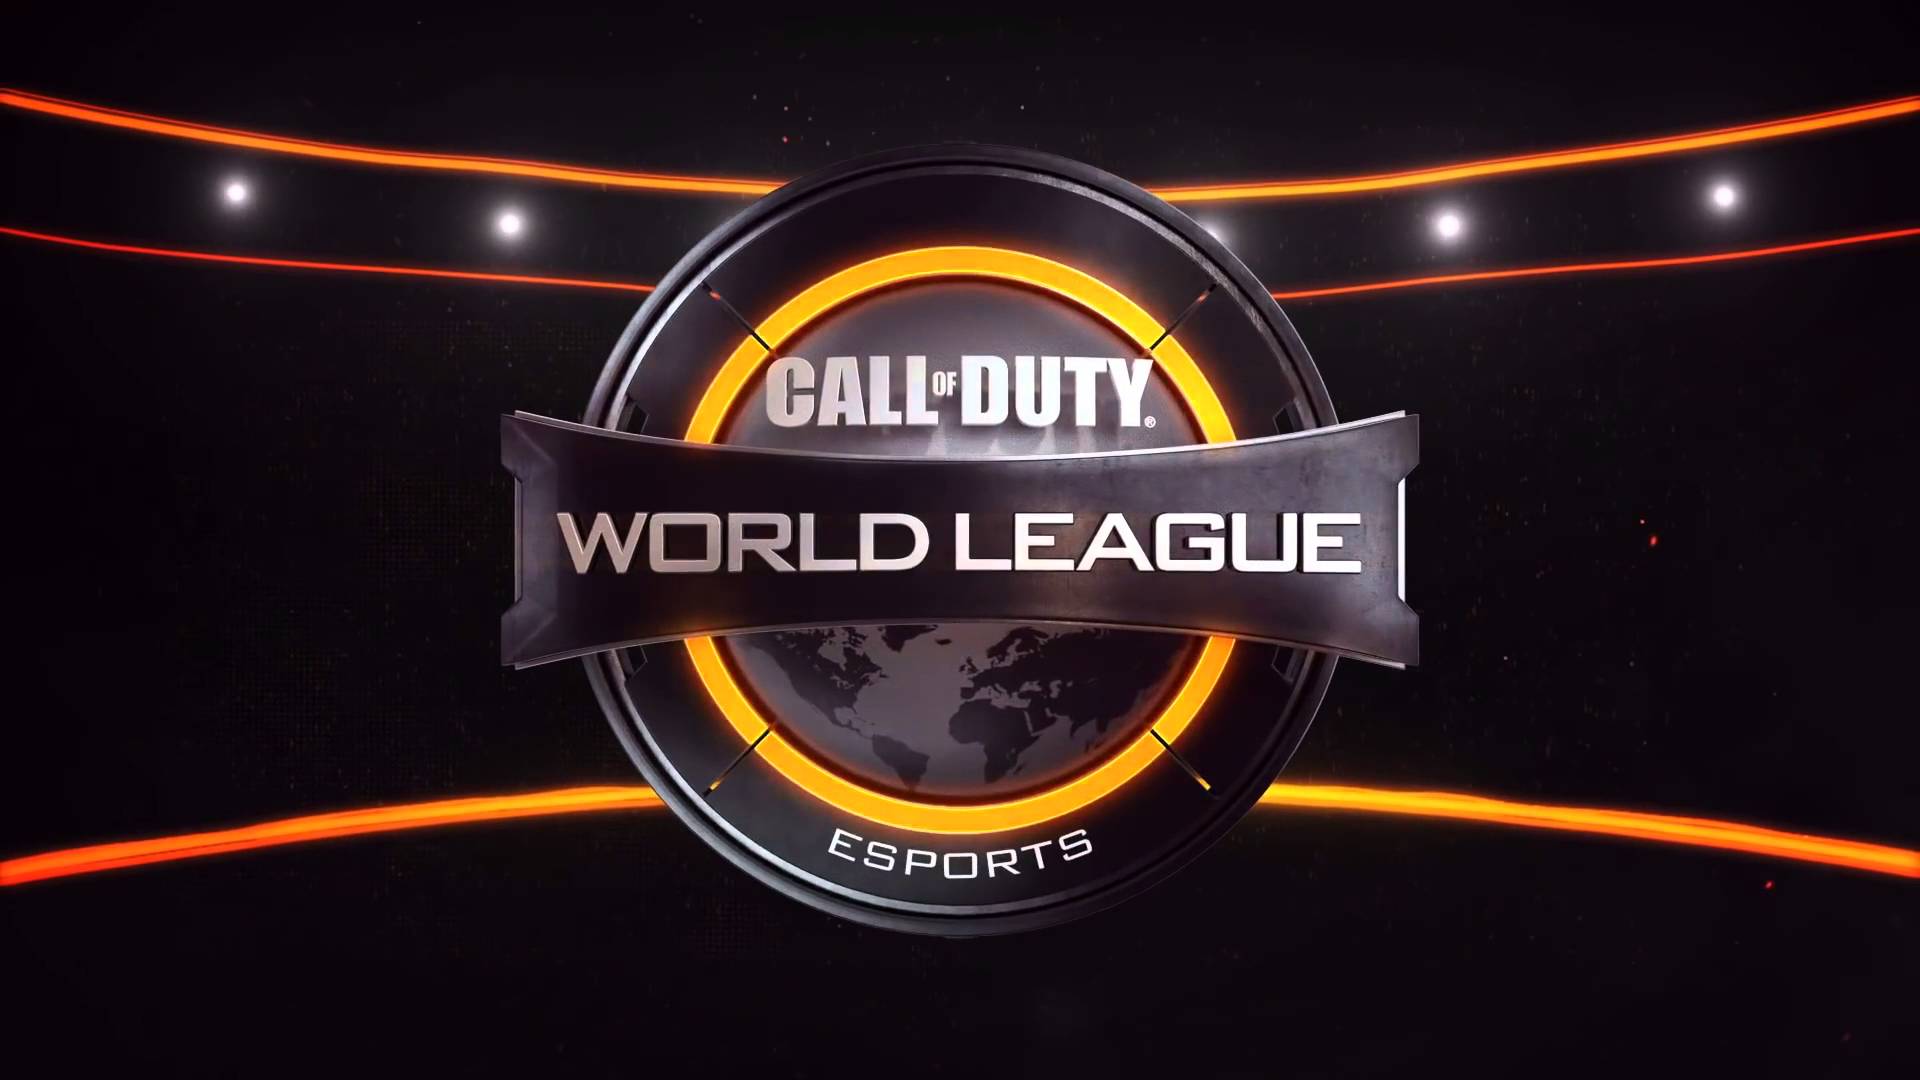 La Call of Duty World League 2019, presentada por PlayStation 4 llega a Los Ángeles